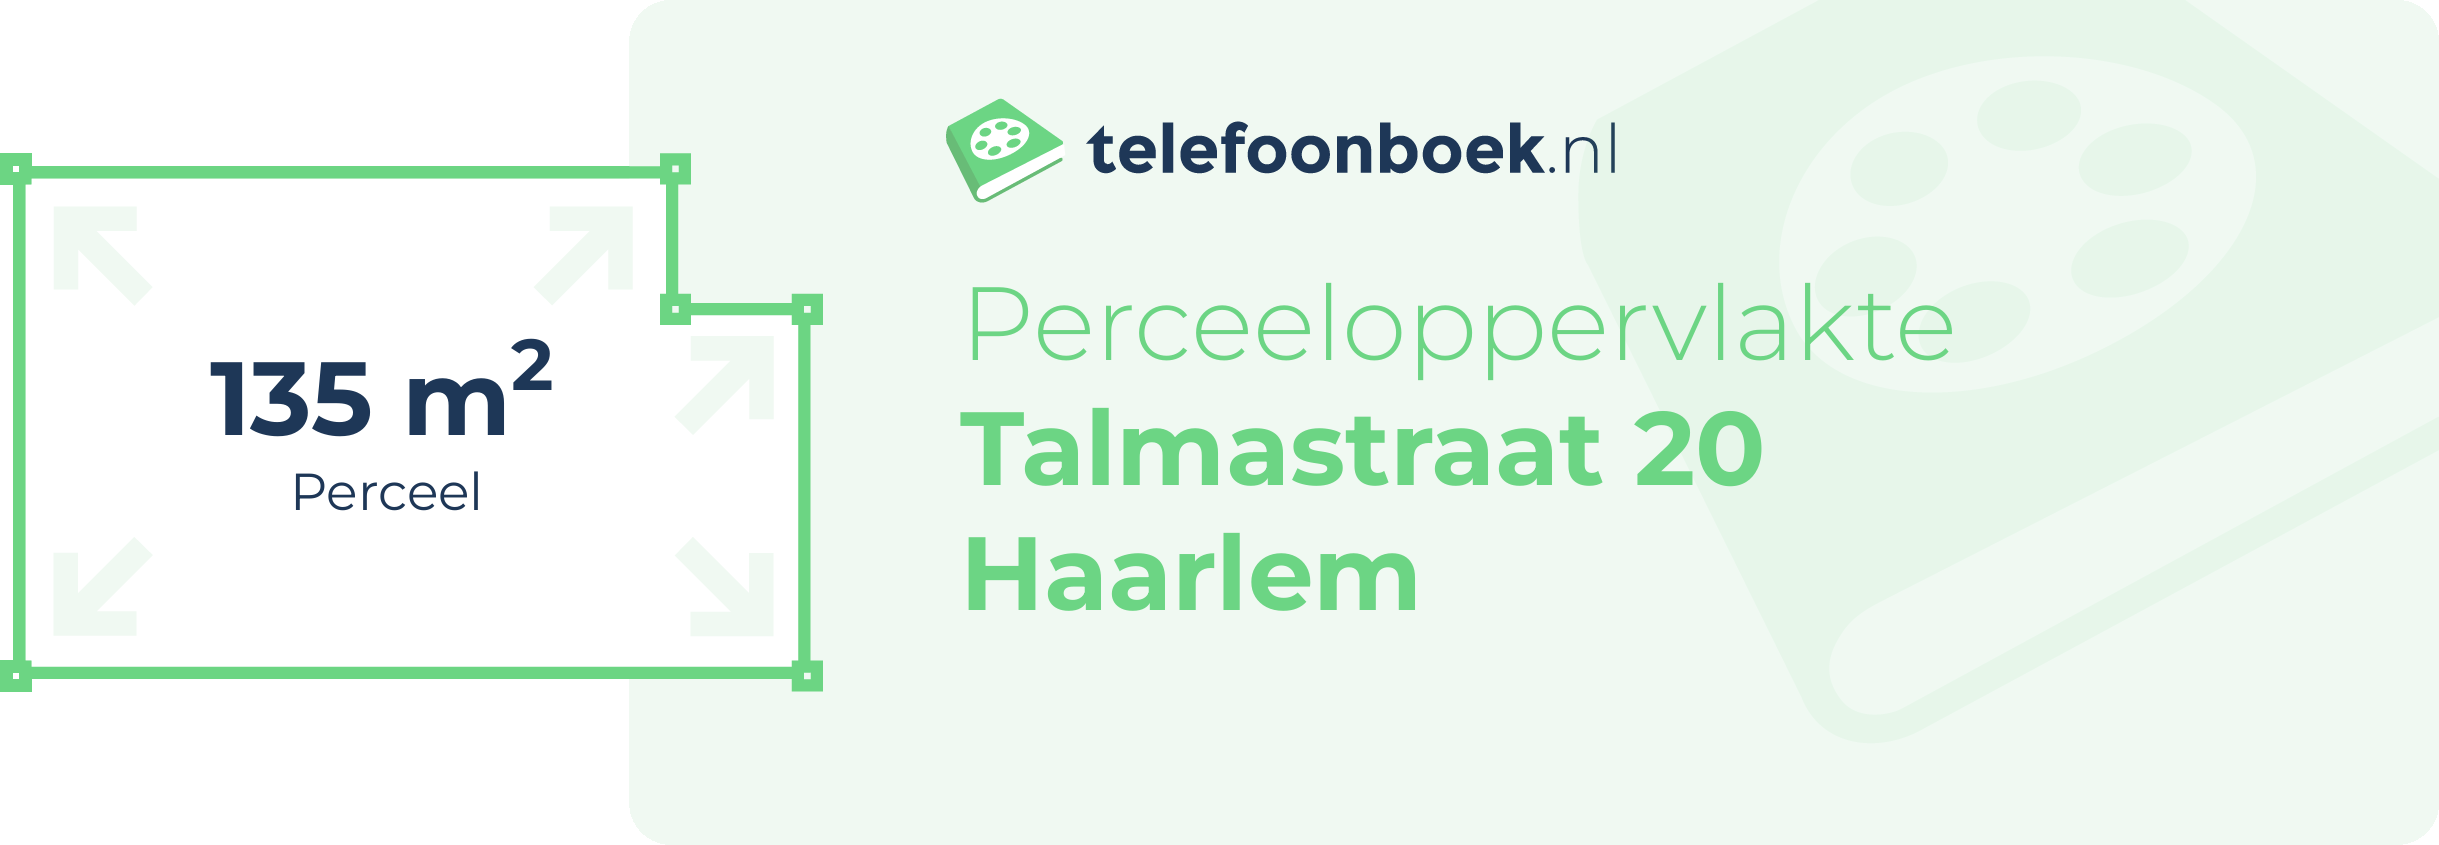 Perceeloppervlakte Talmastraat 20 Haarlem